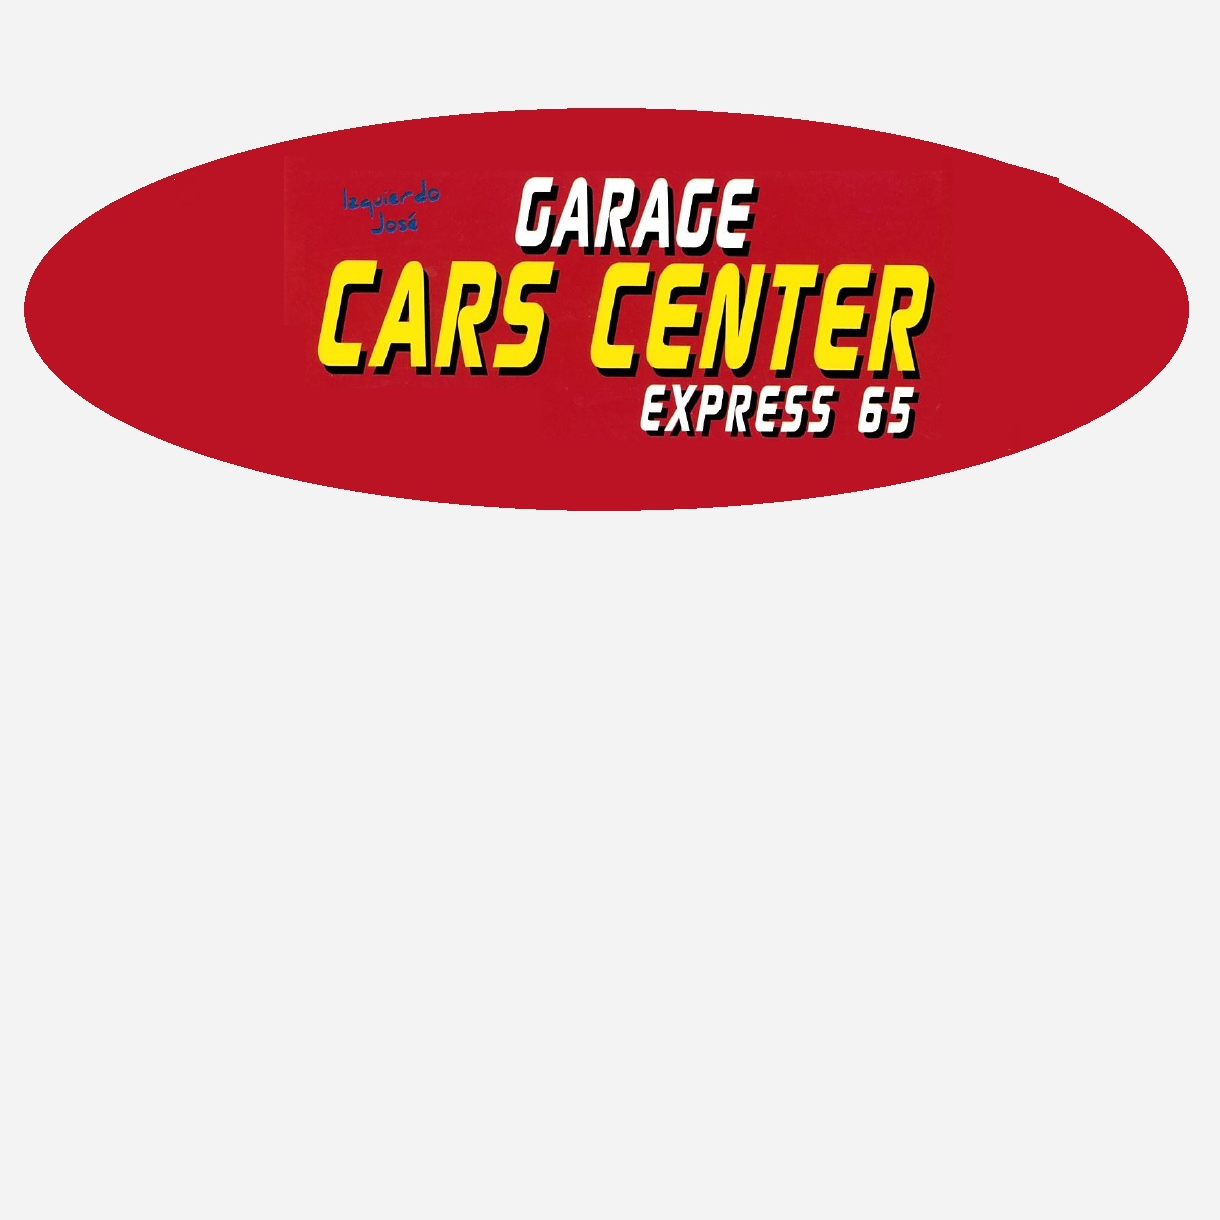 CARS CENTER EXPRESS 65